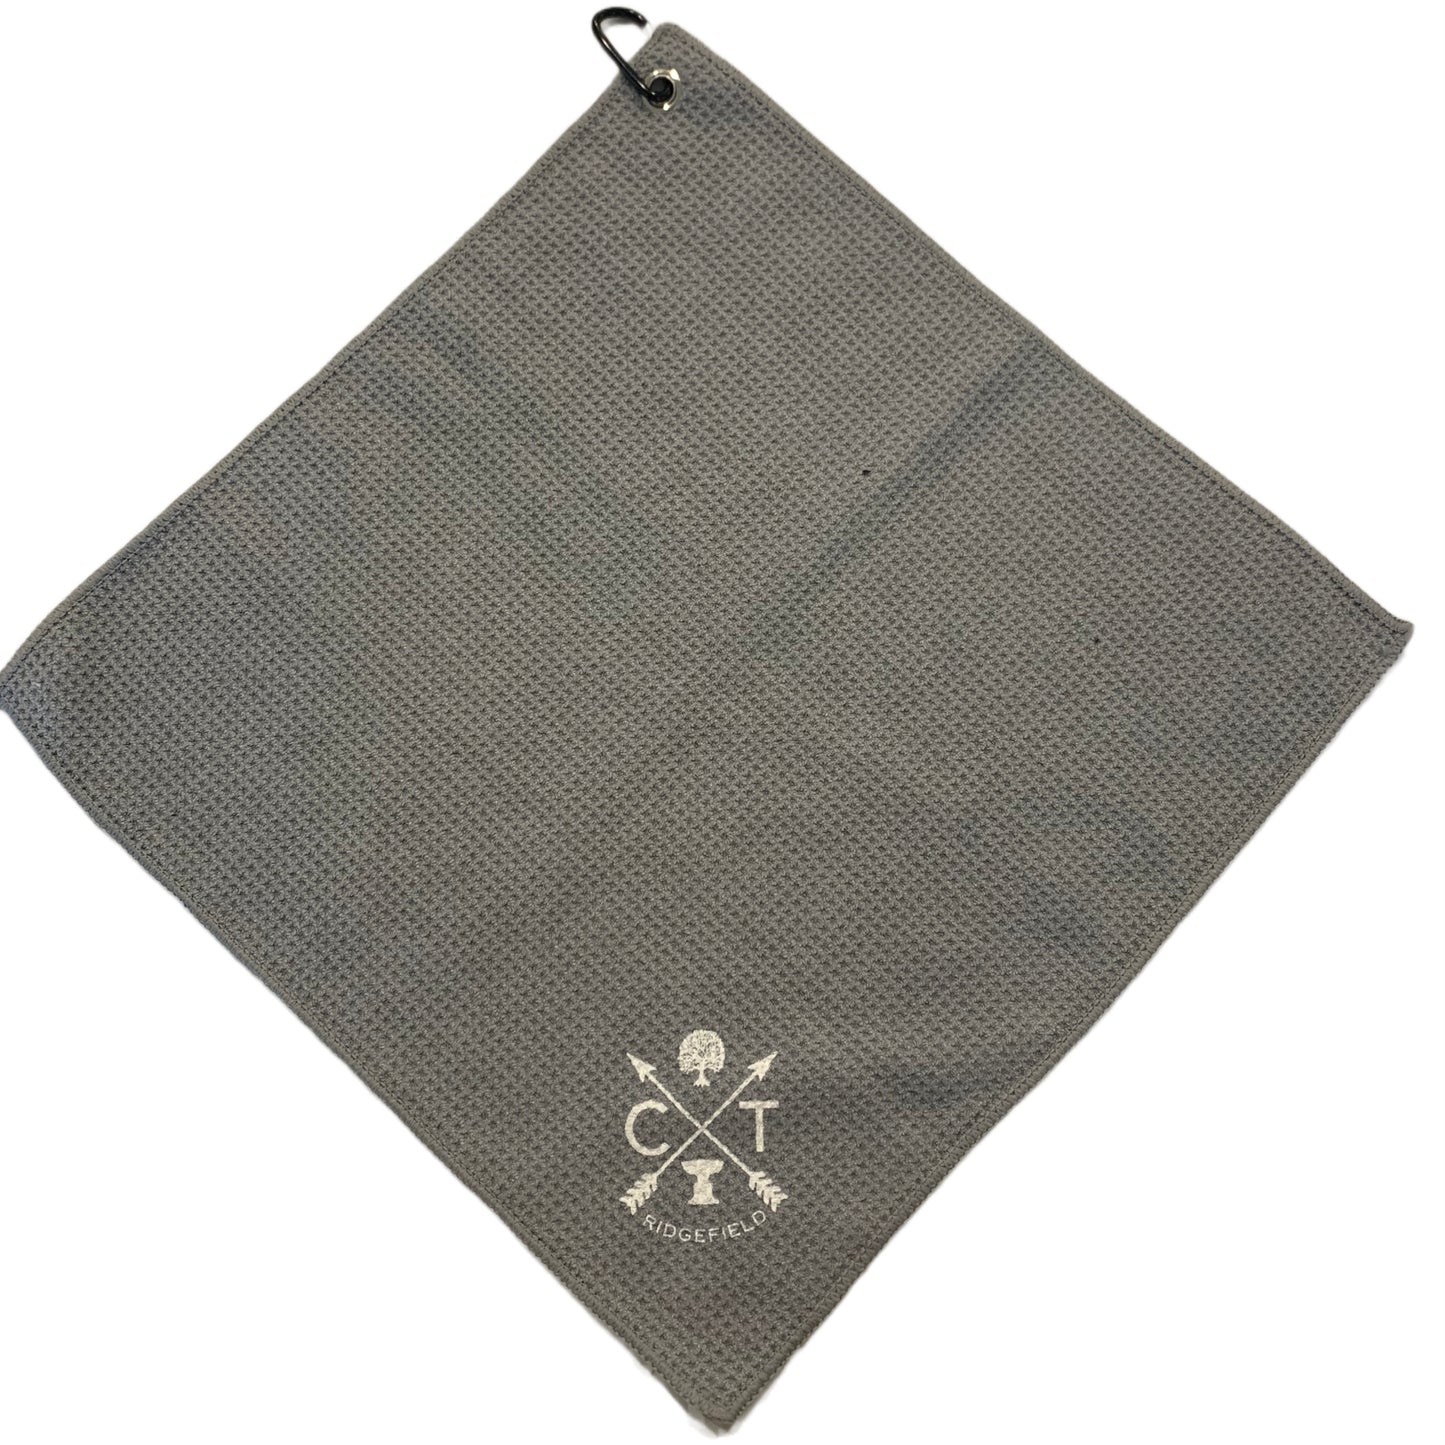 Iconic Ridgefield Golf Towel